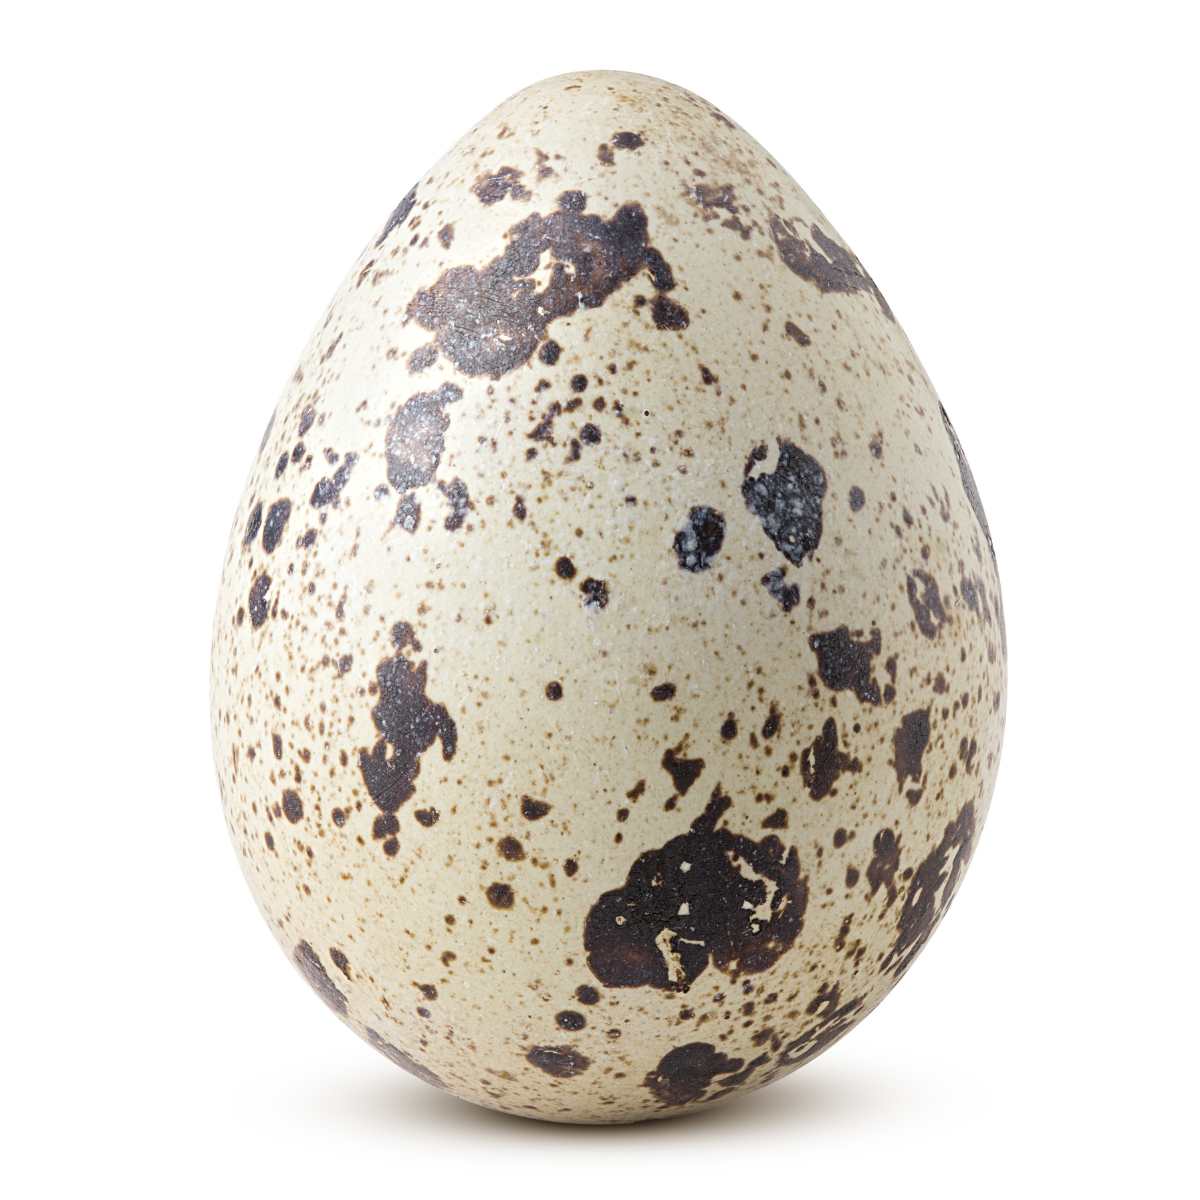 A quail egg on a white background.